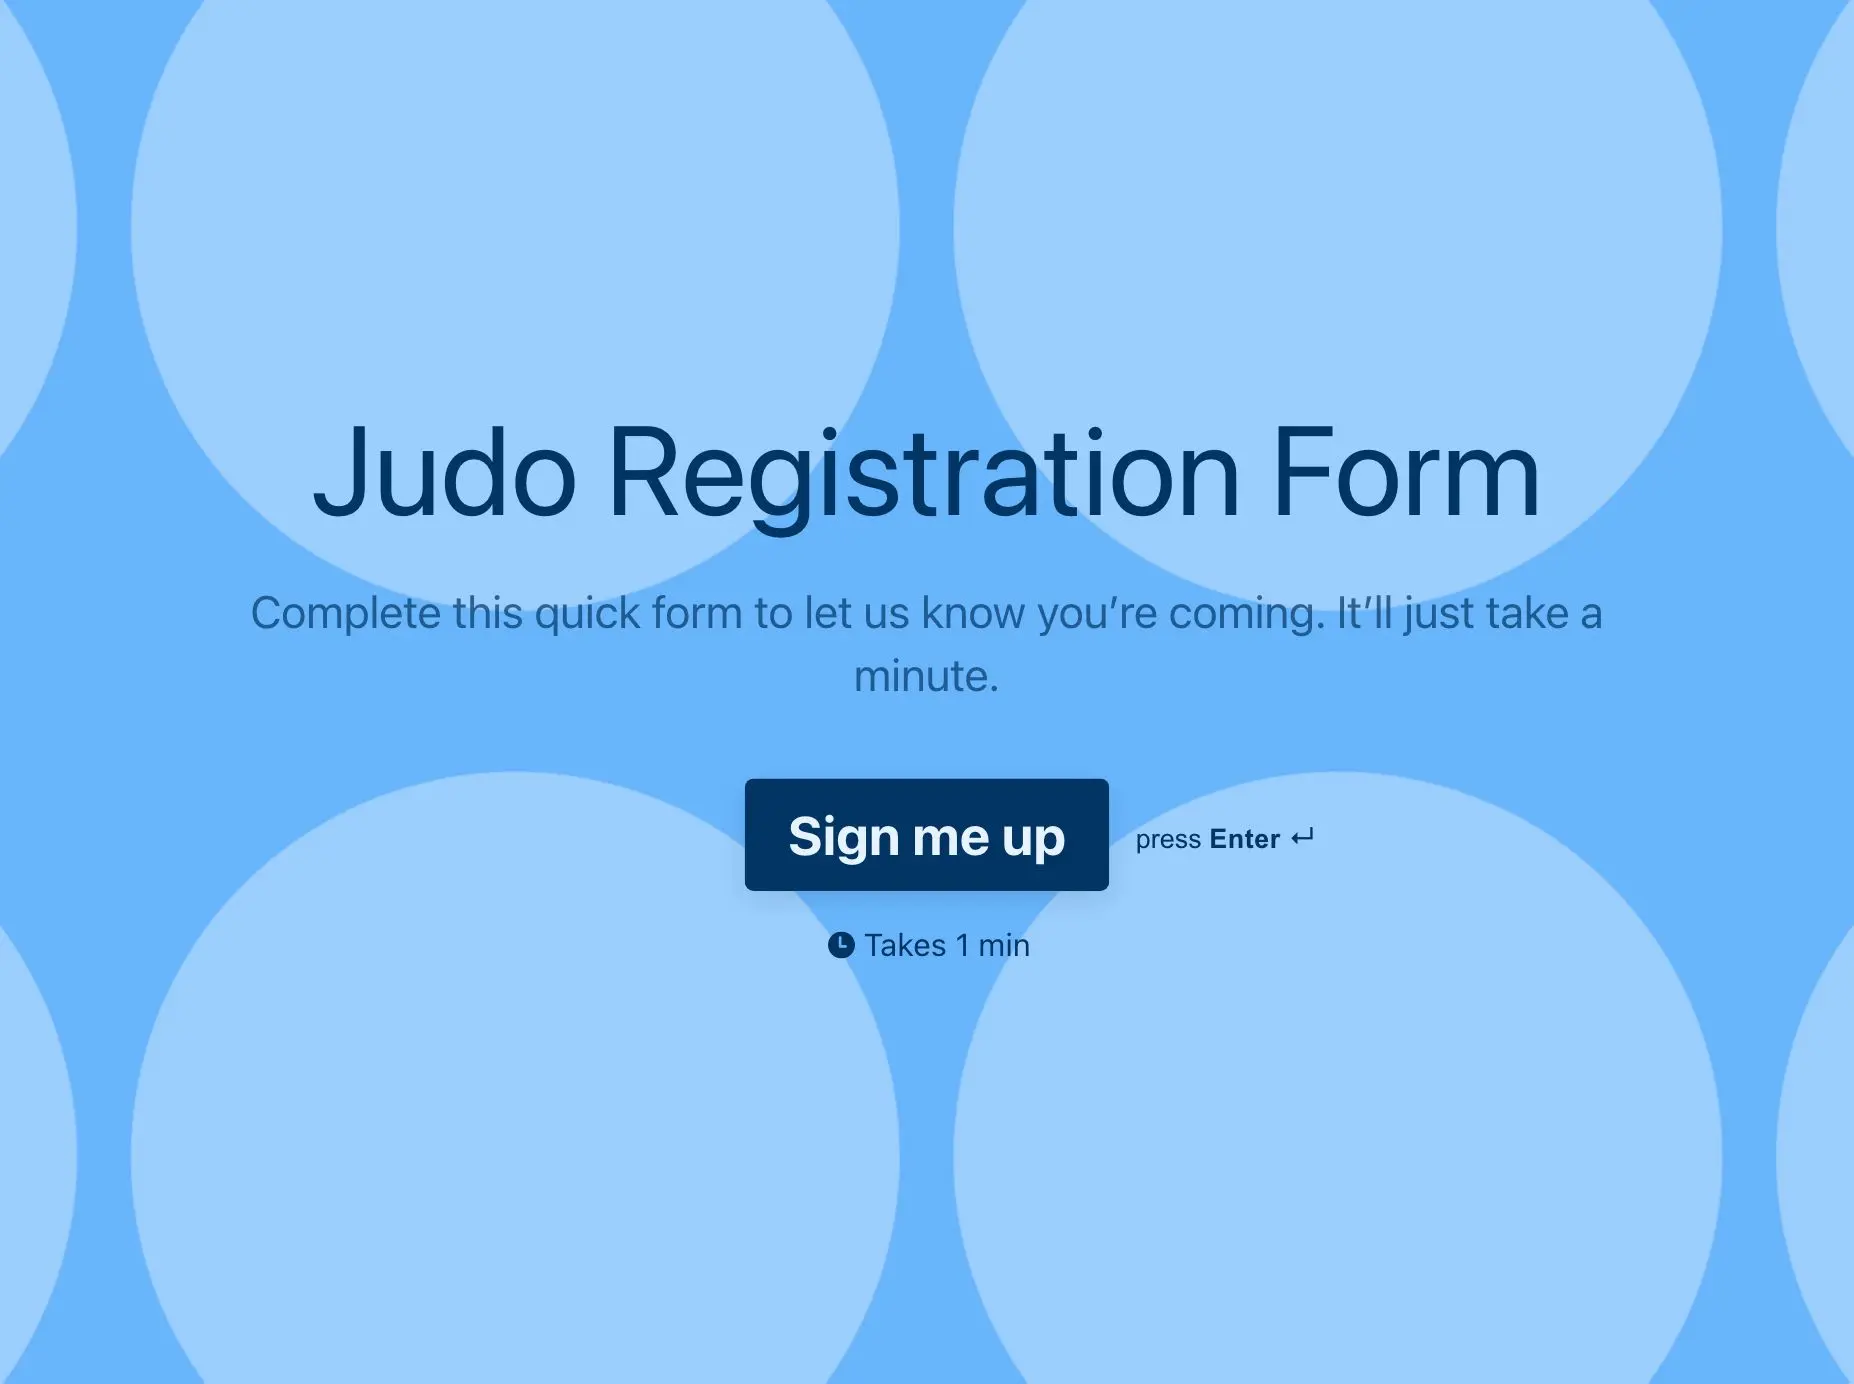 Judo Registration Form Template Hero